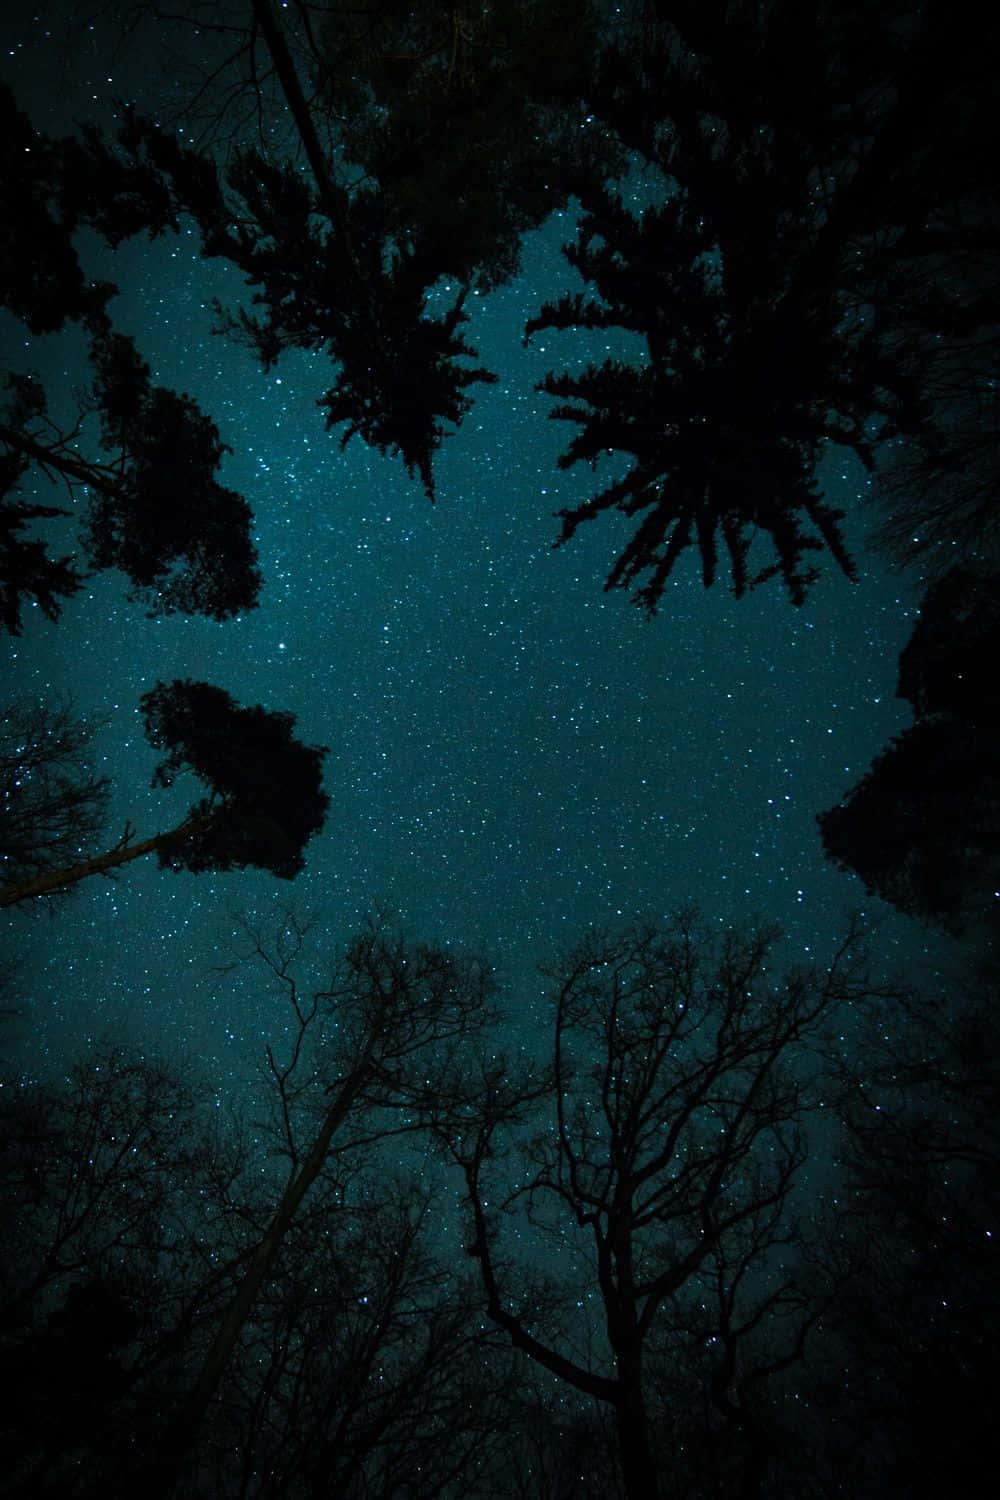 Dark Starry Night Sky In Worm Eye View Wallpaper